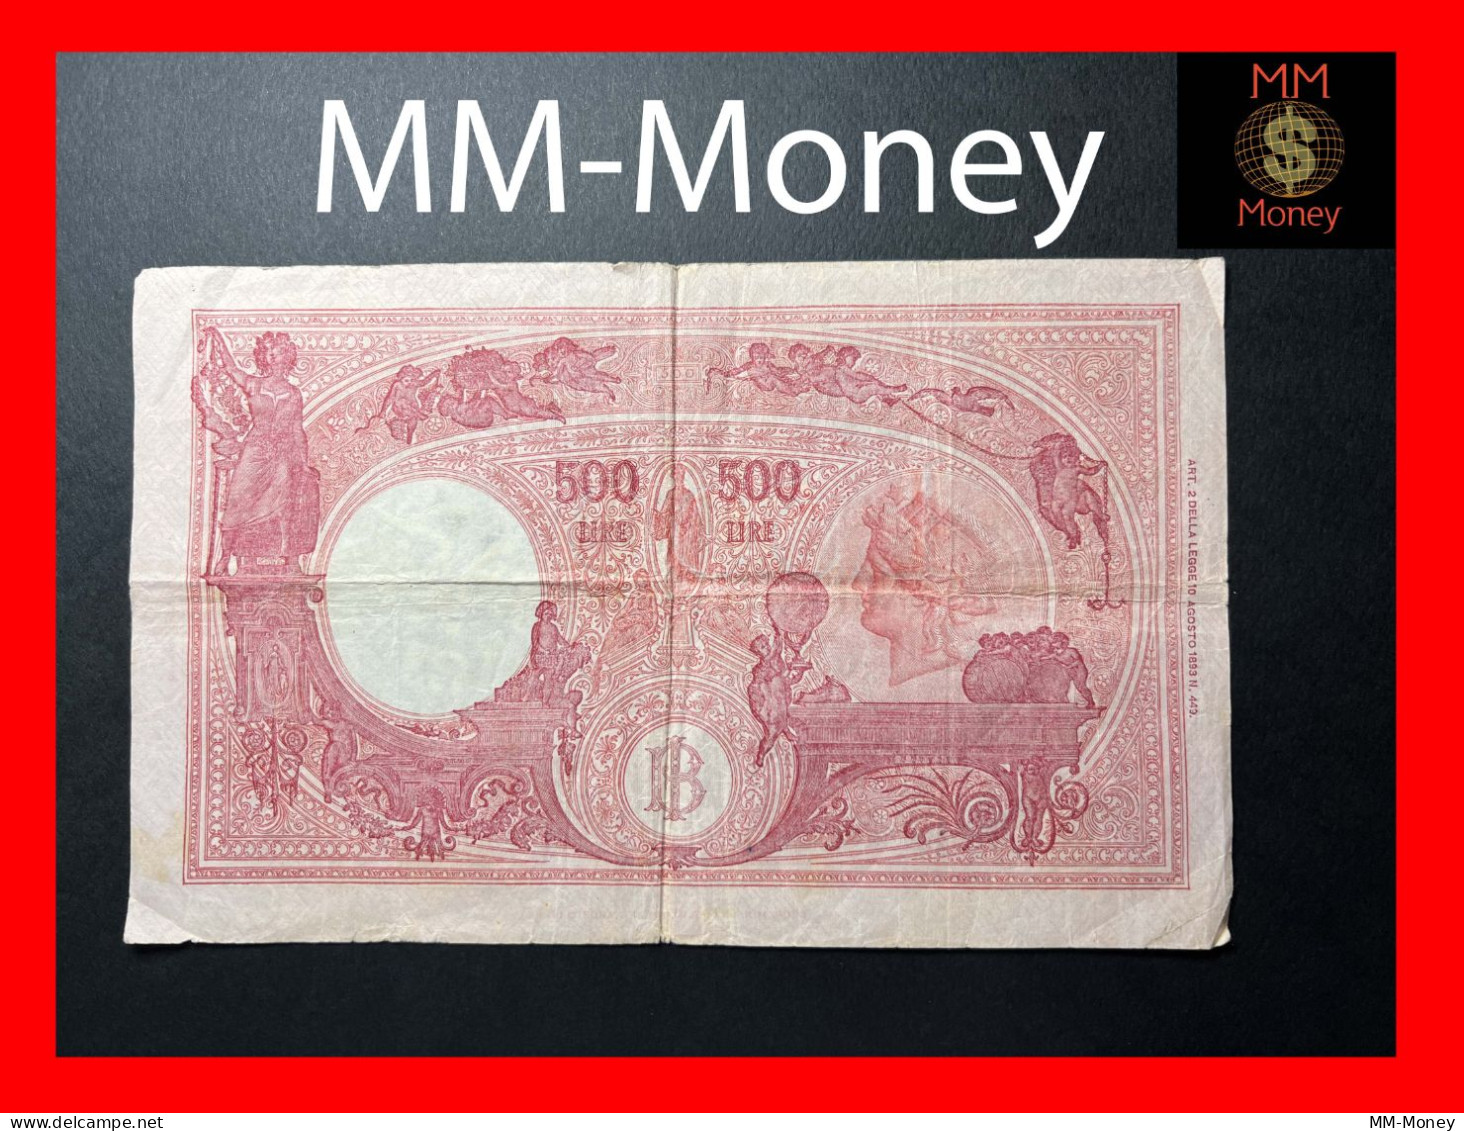 ITALY 500 Lire  11.11.1944   P.  70  VF  *scarce*      [MM-Money] - 500 Lire